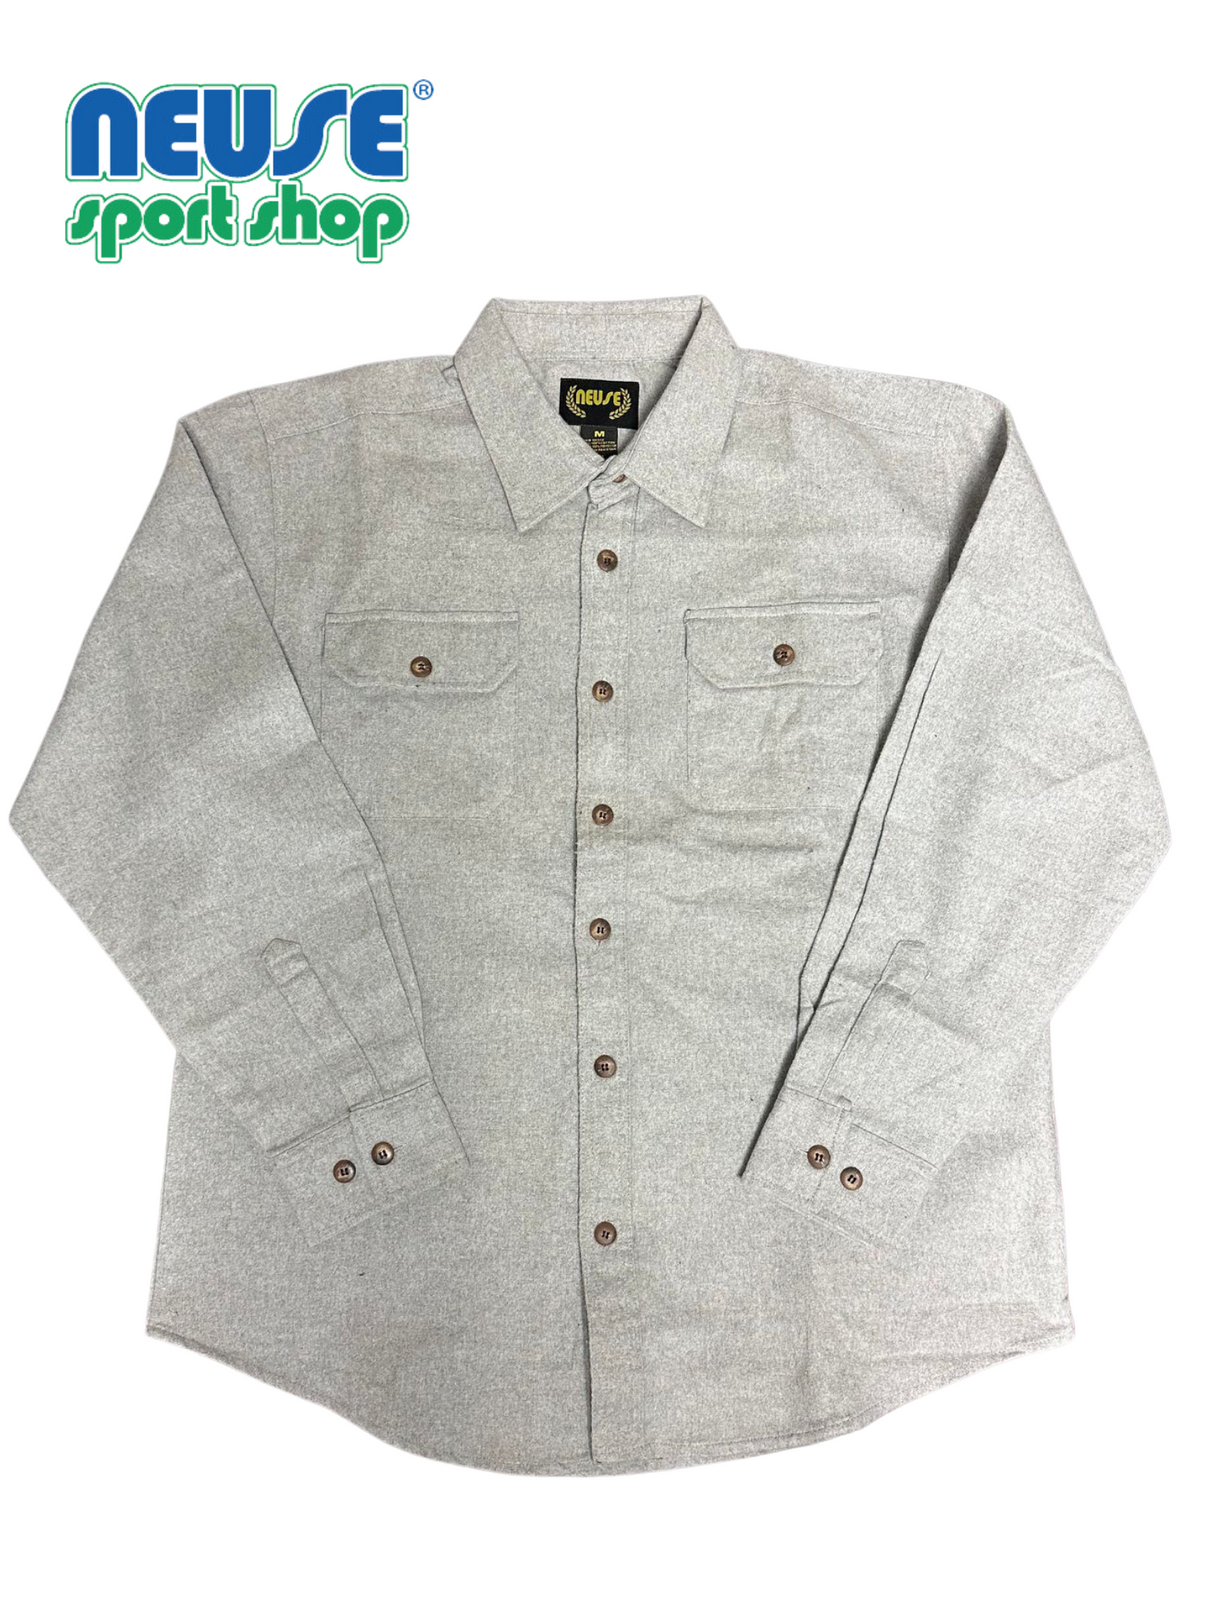 Neuse Sport Shop Chamois Button up Shirt